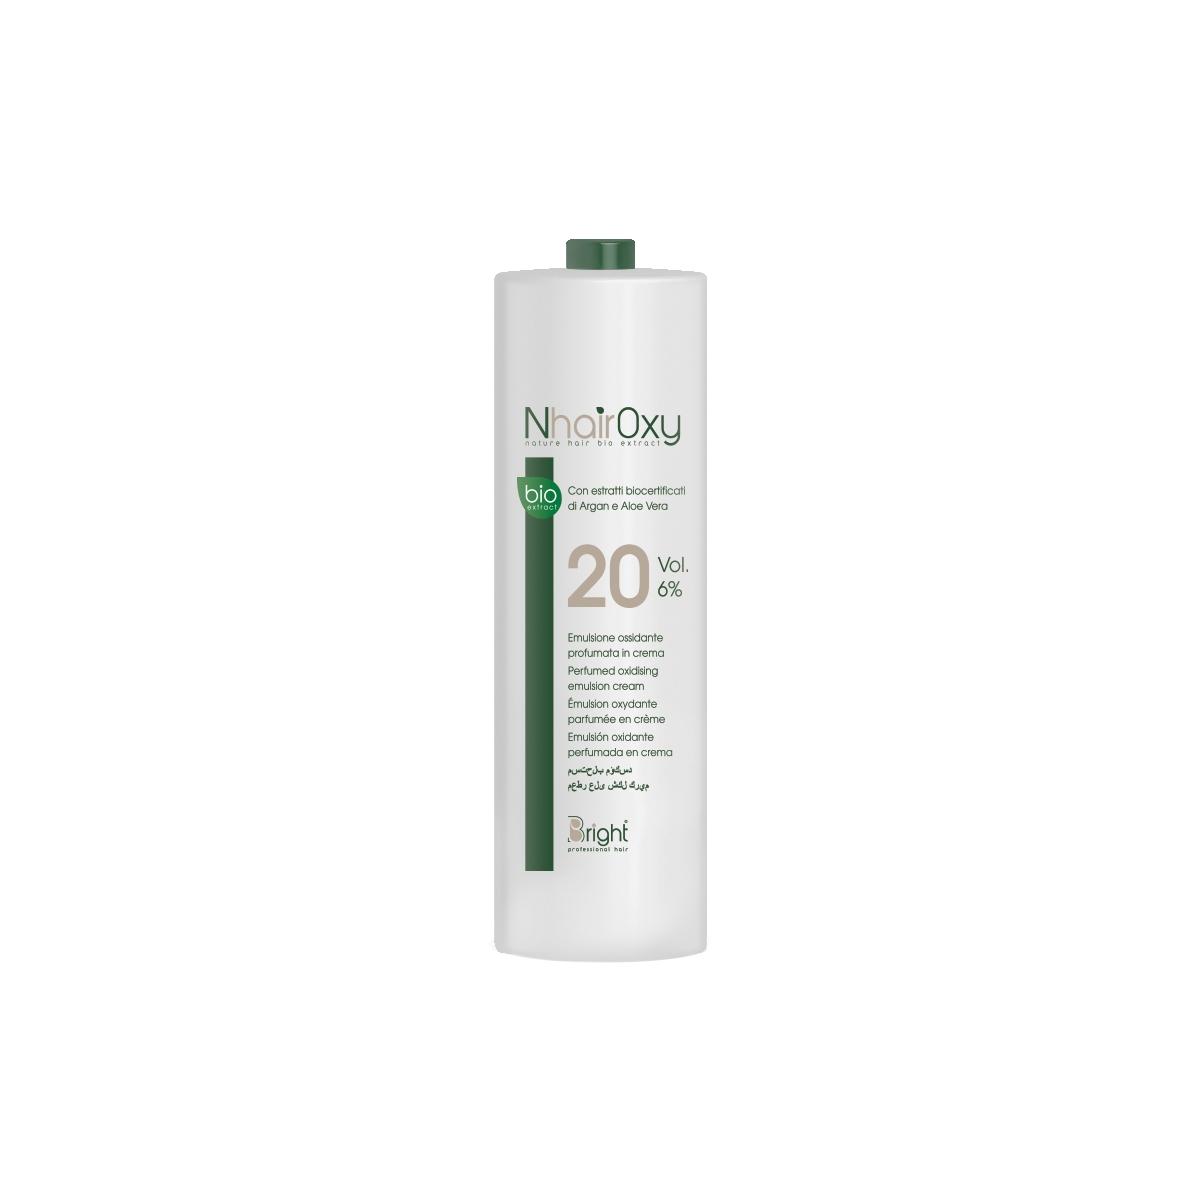 Bright Nhair Oxy 20 volumi 6% emulsione ossidante profumata in crema 1000 ml